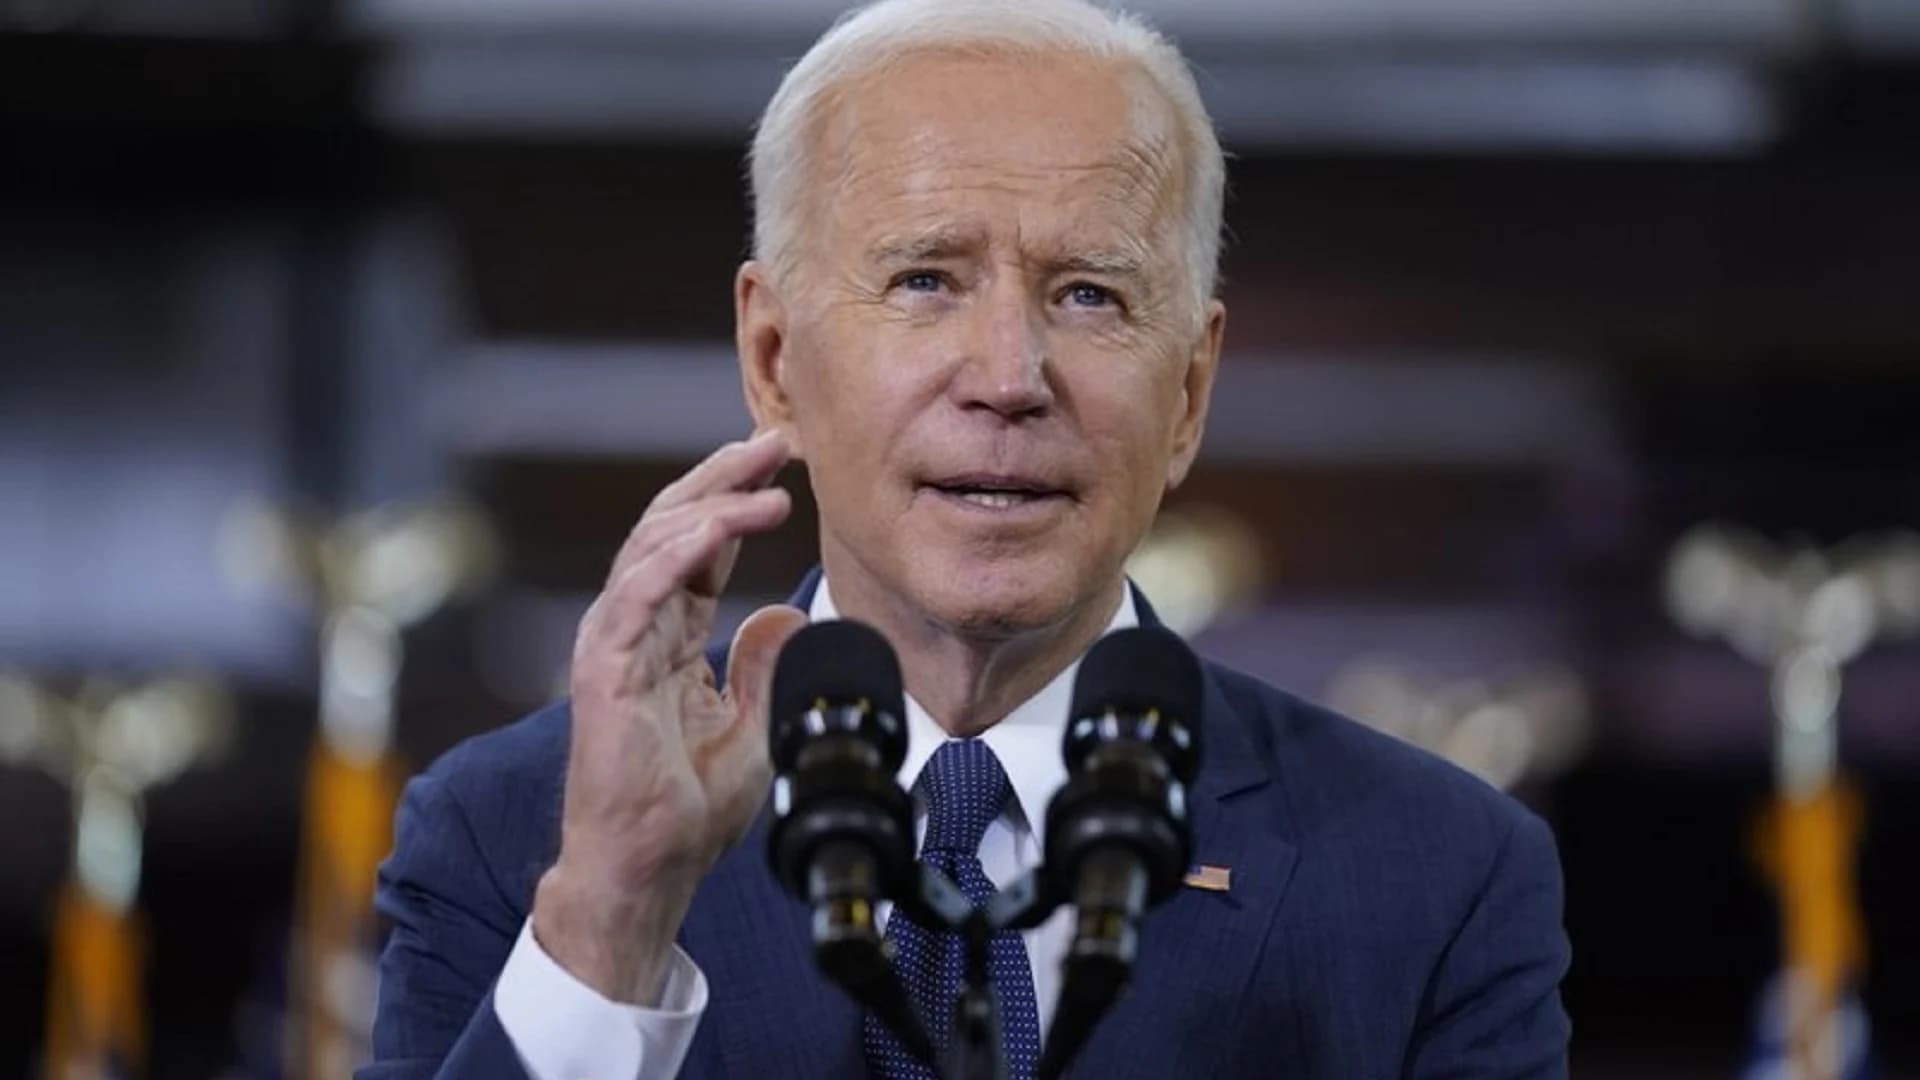 President Biden offers tax deal to Republicans in infrastructure talks